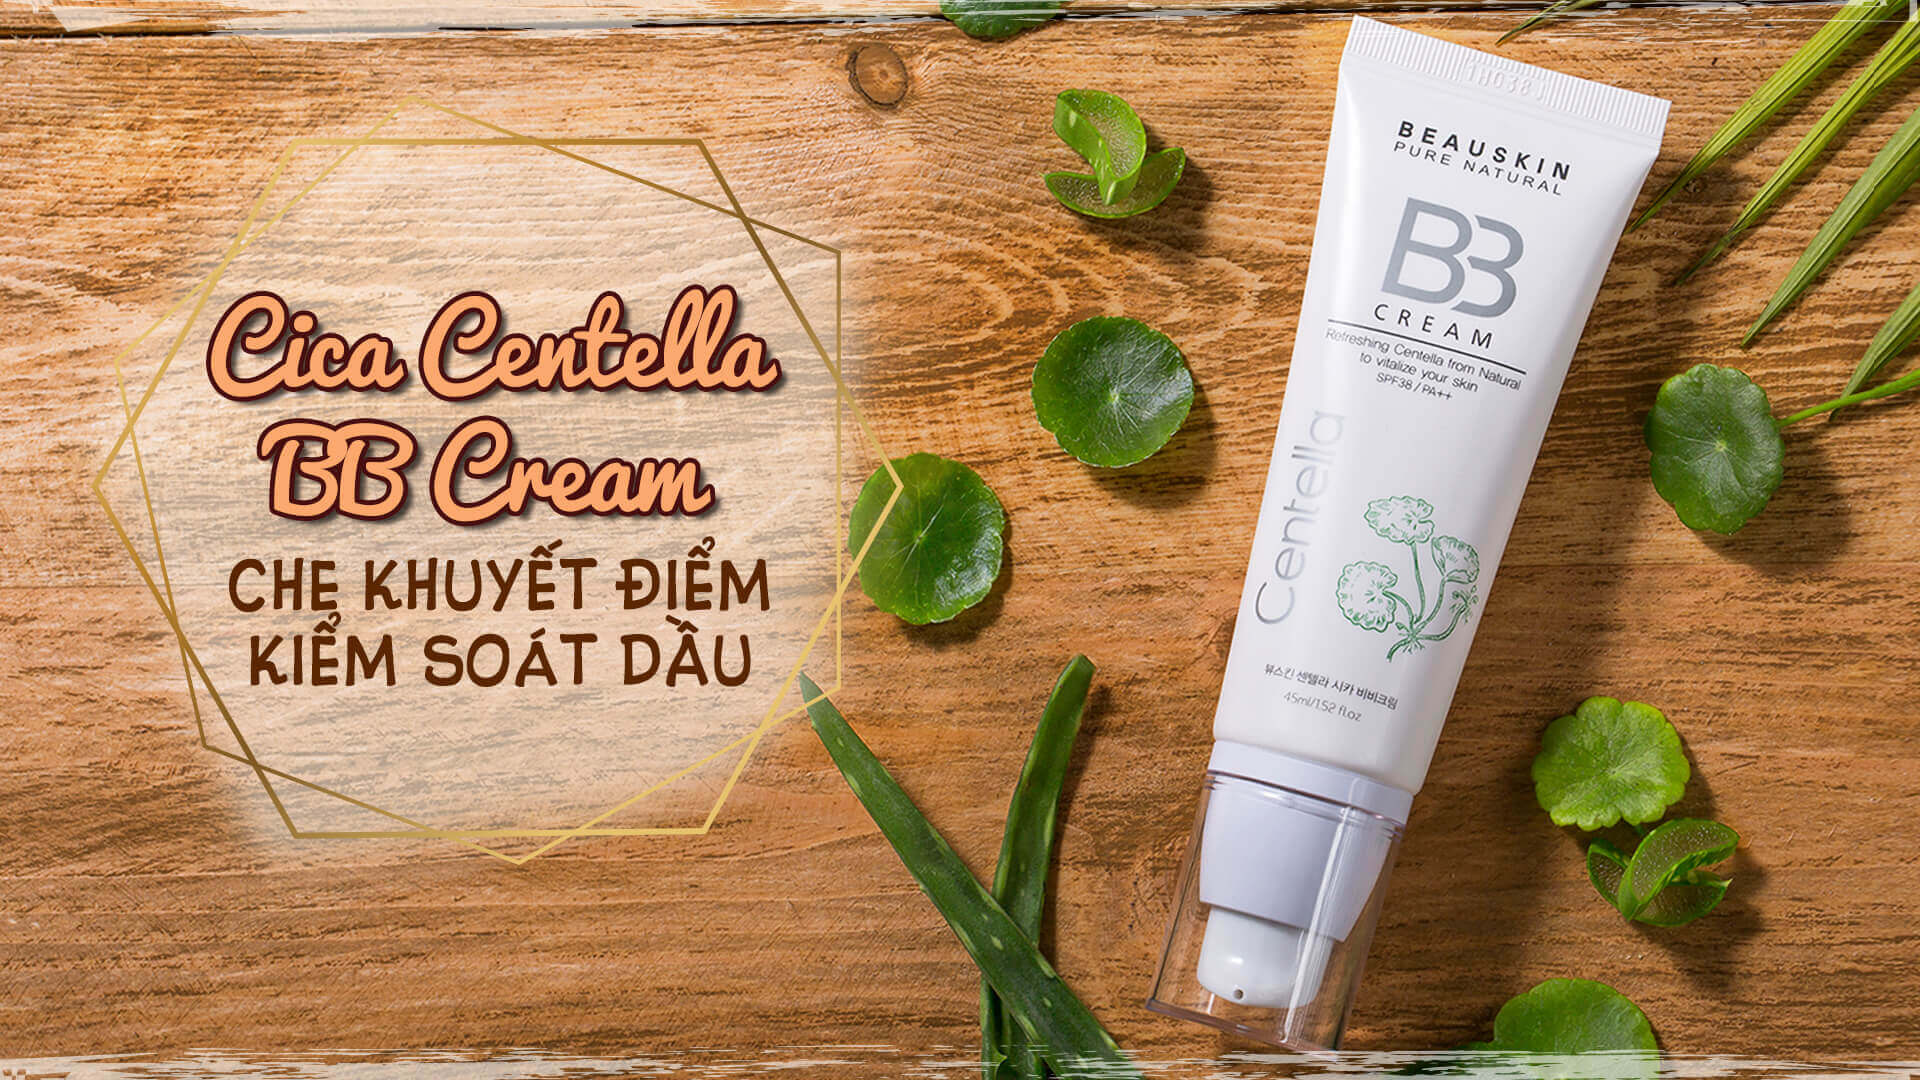 Cica Centella Beauskin BB cream dành riêng cho da dầu